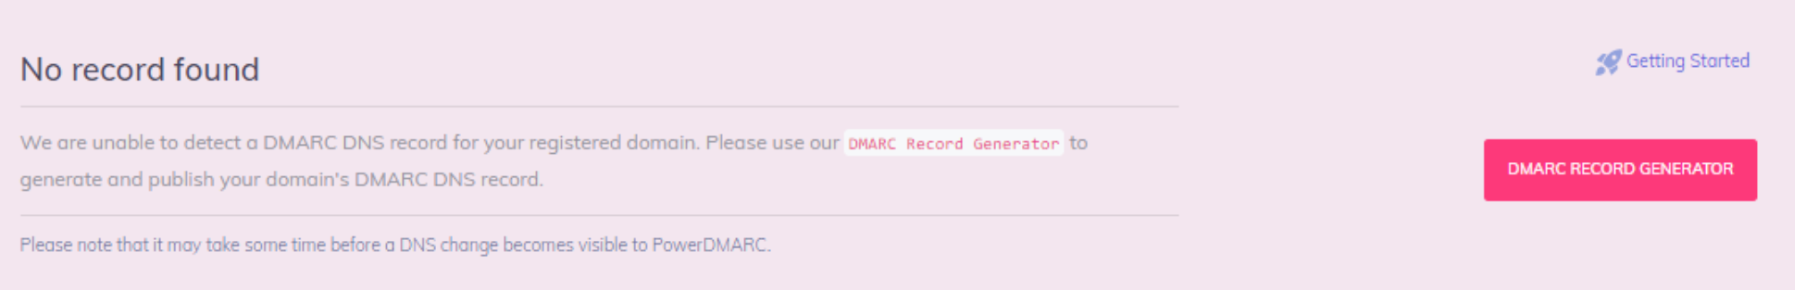 no DMARC record found